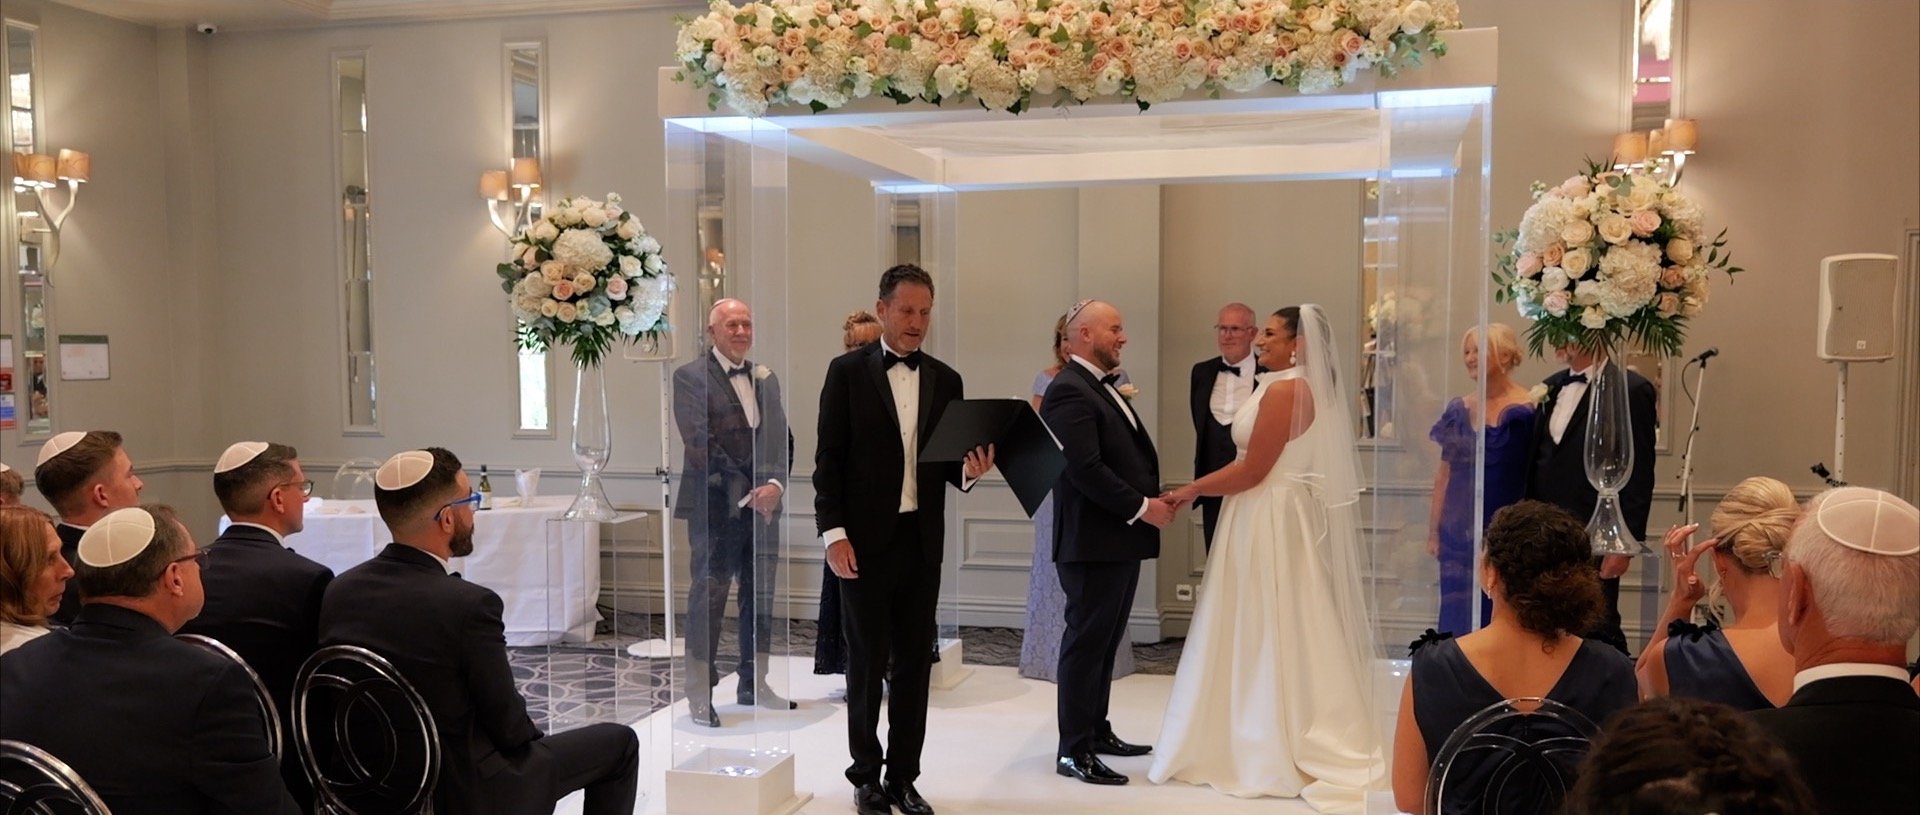 Sopwell House wedding videography - 3 Cheers Media - getting married - jewish wedding.jpg